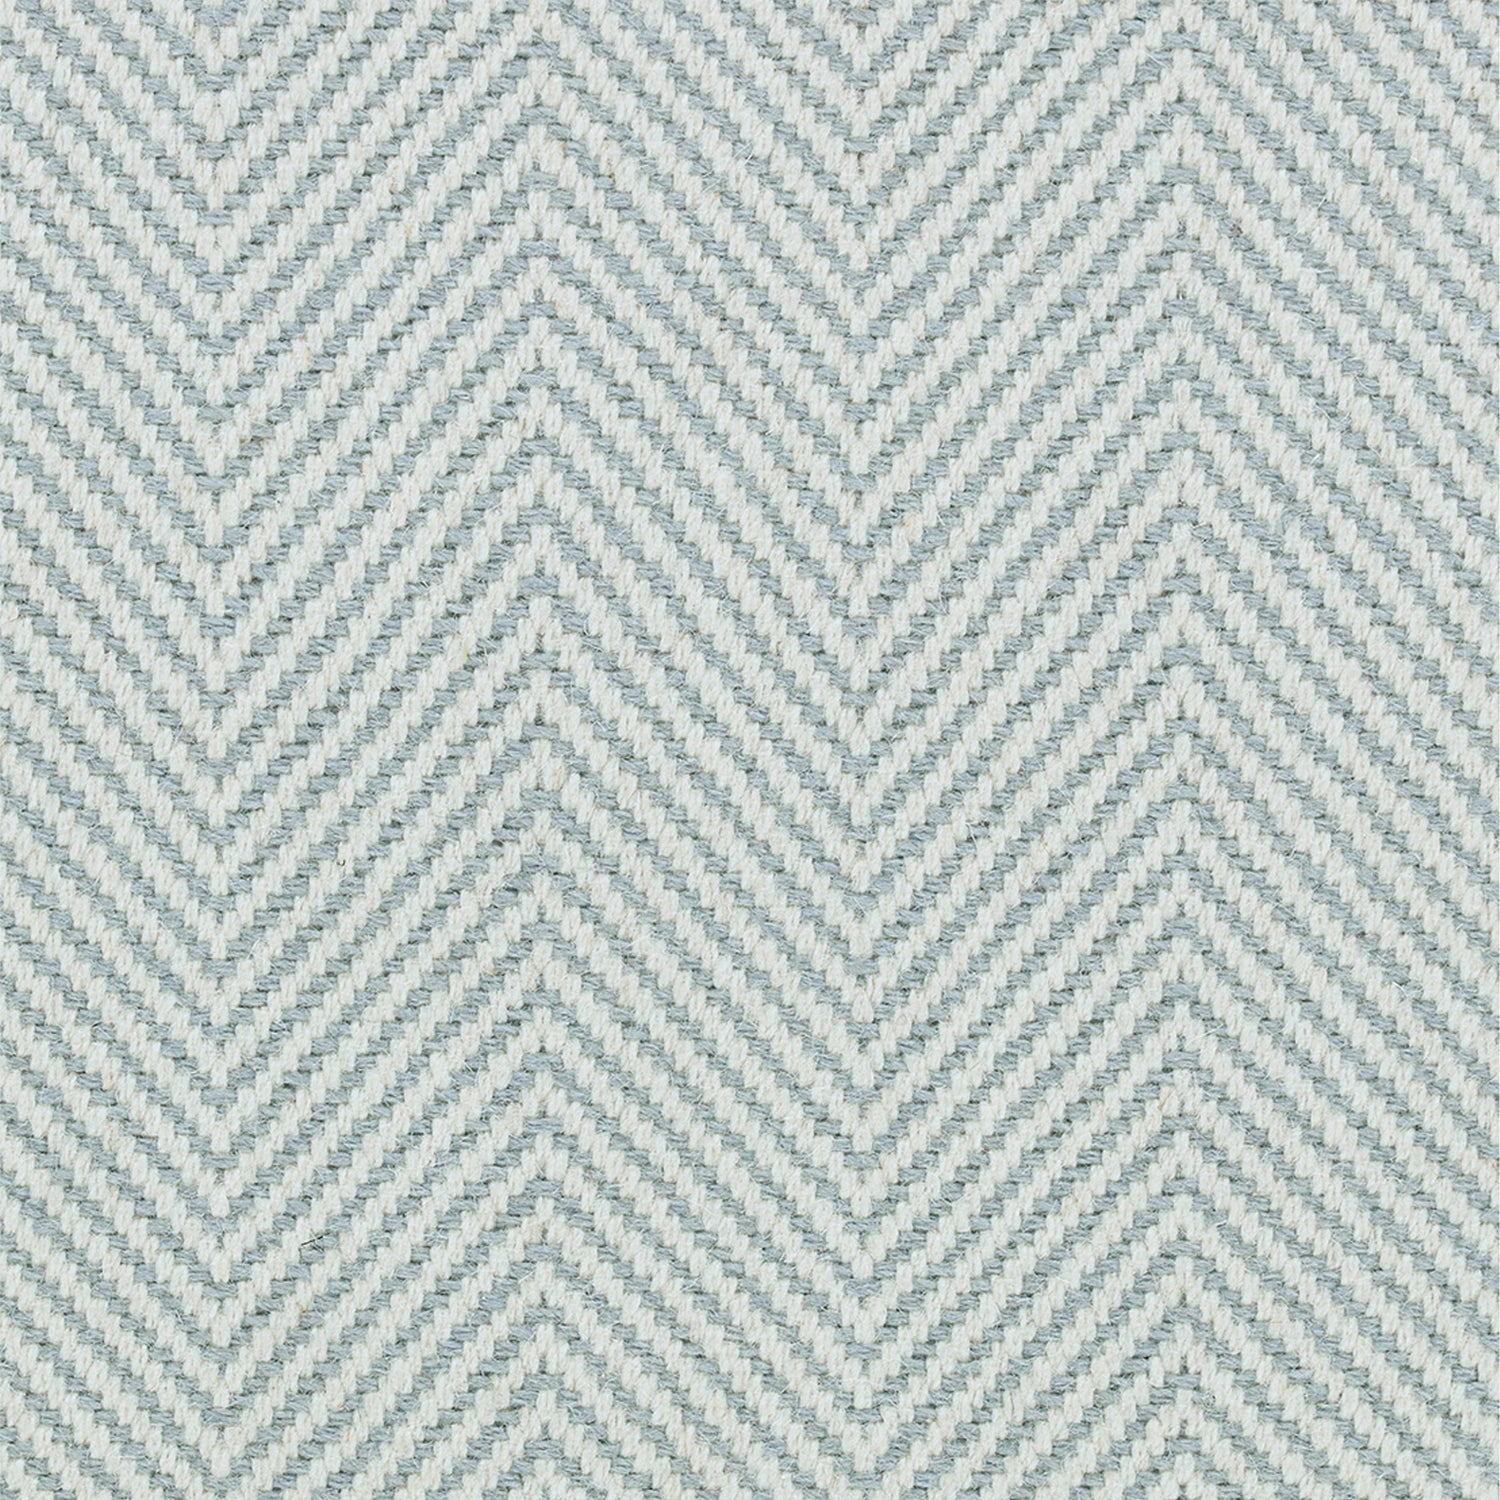 Wool broadloom carpet swatch in a herringbone weave in sky blue and white.